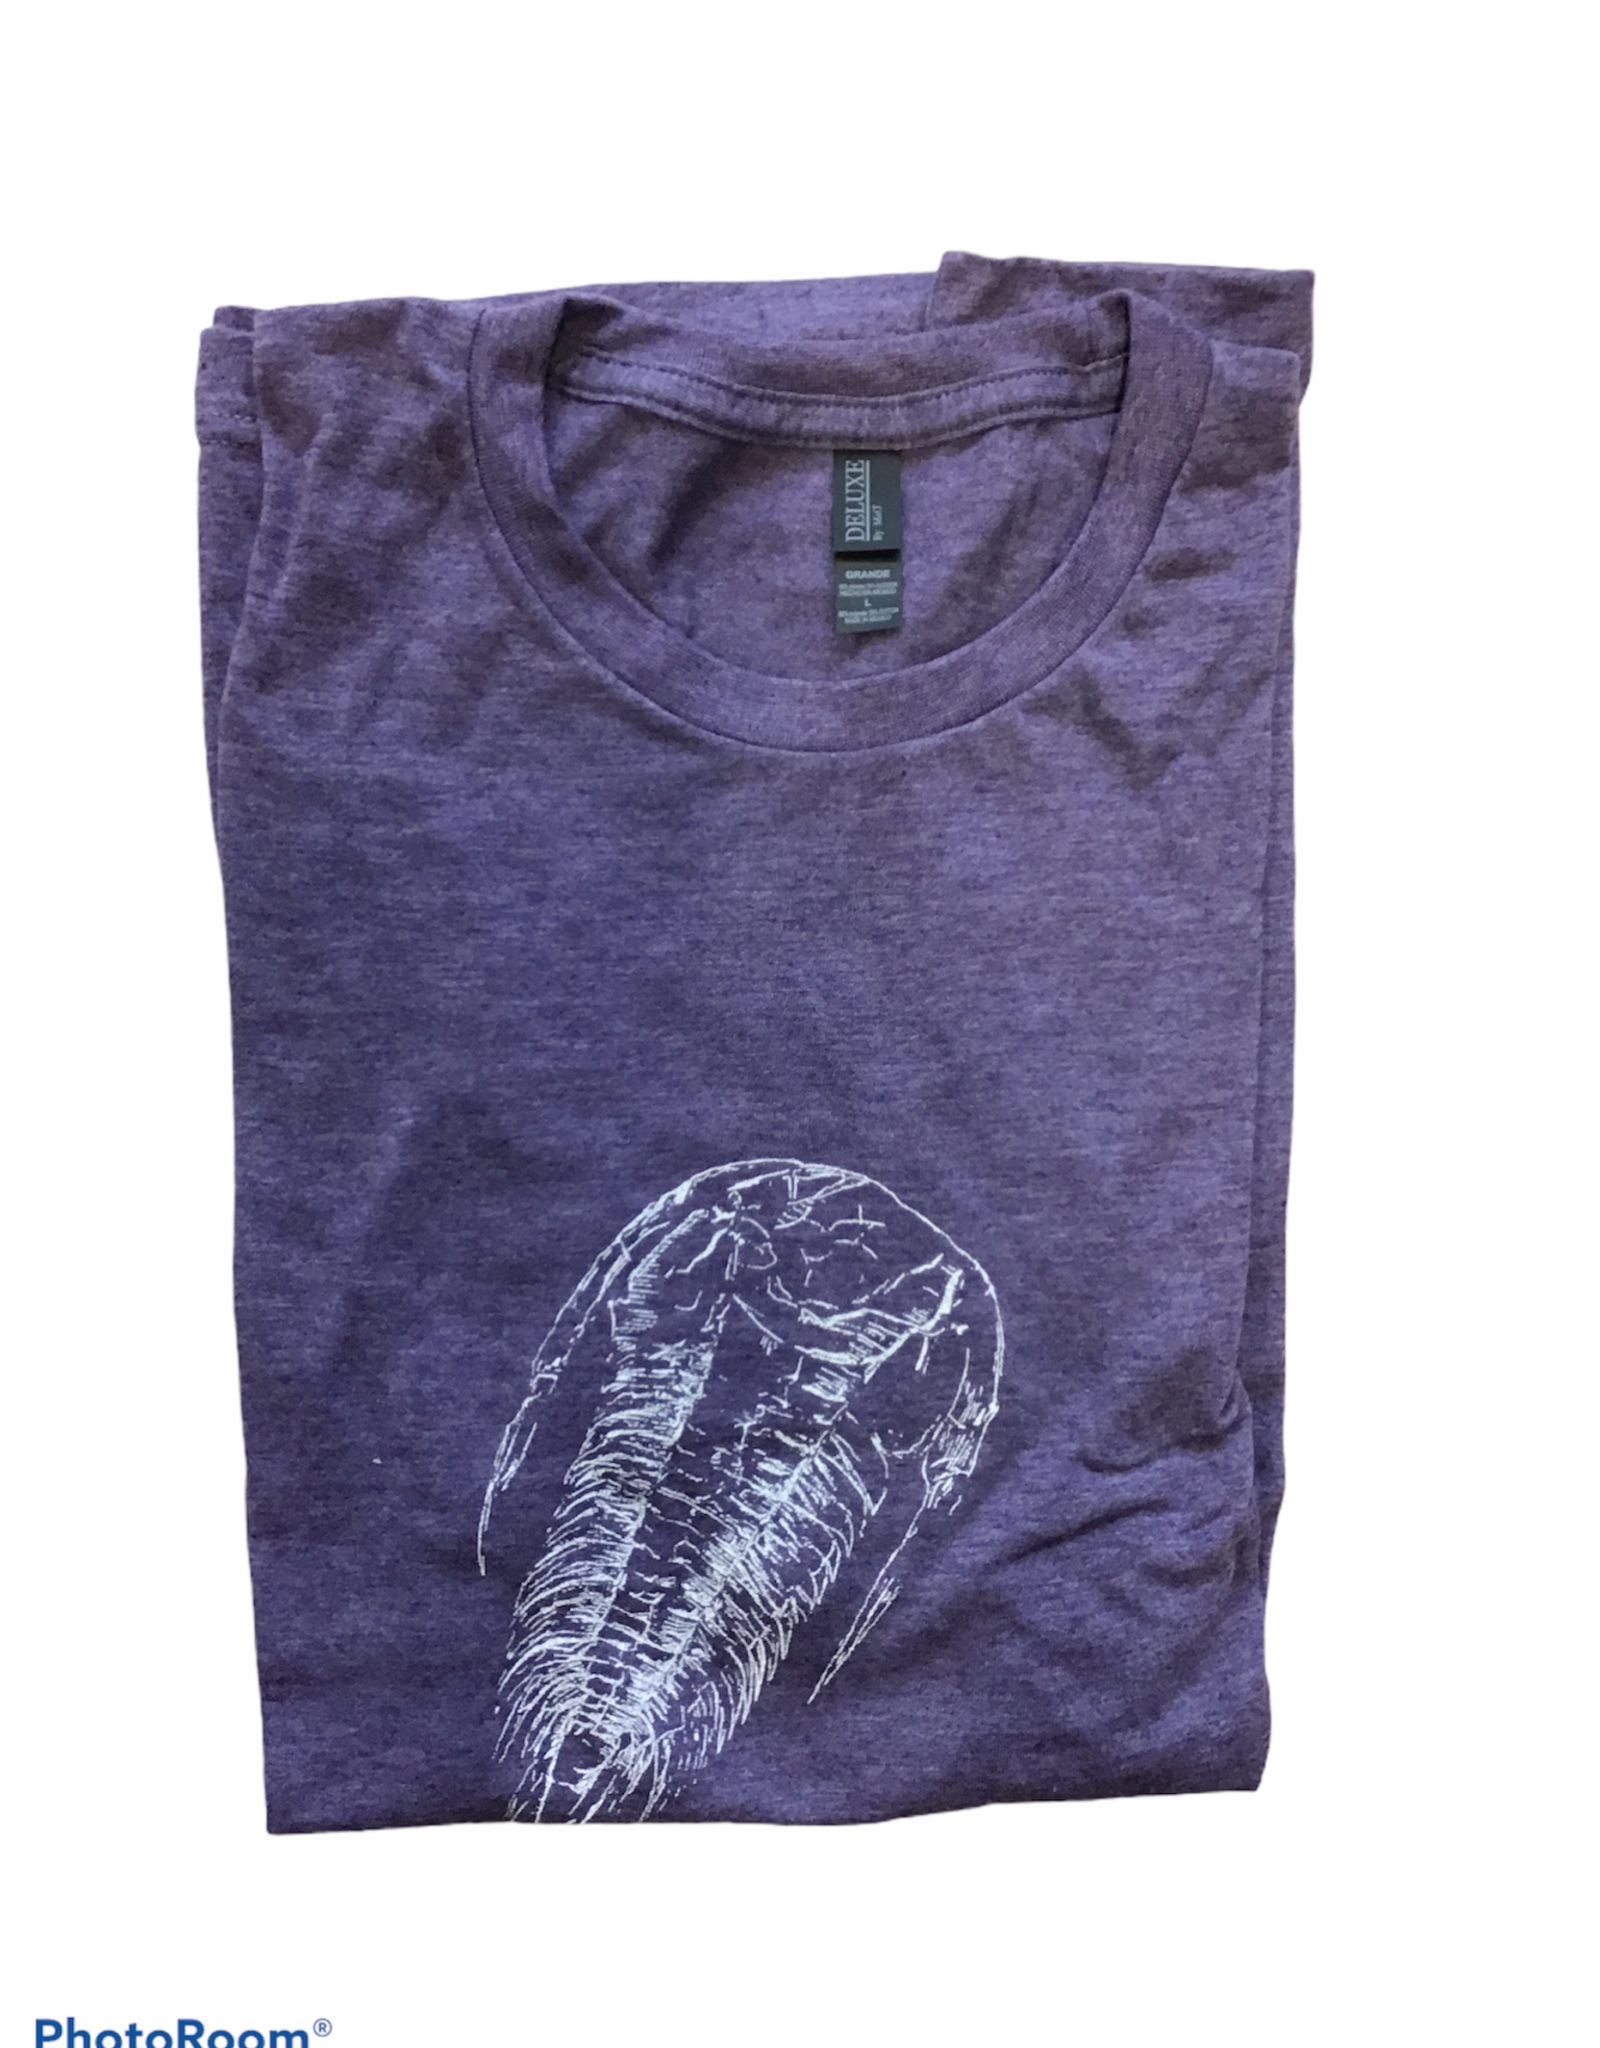 MR Trilobite Shirt